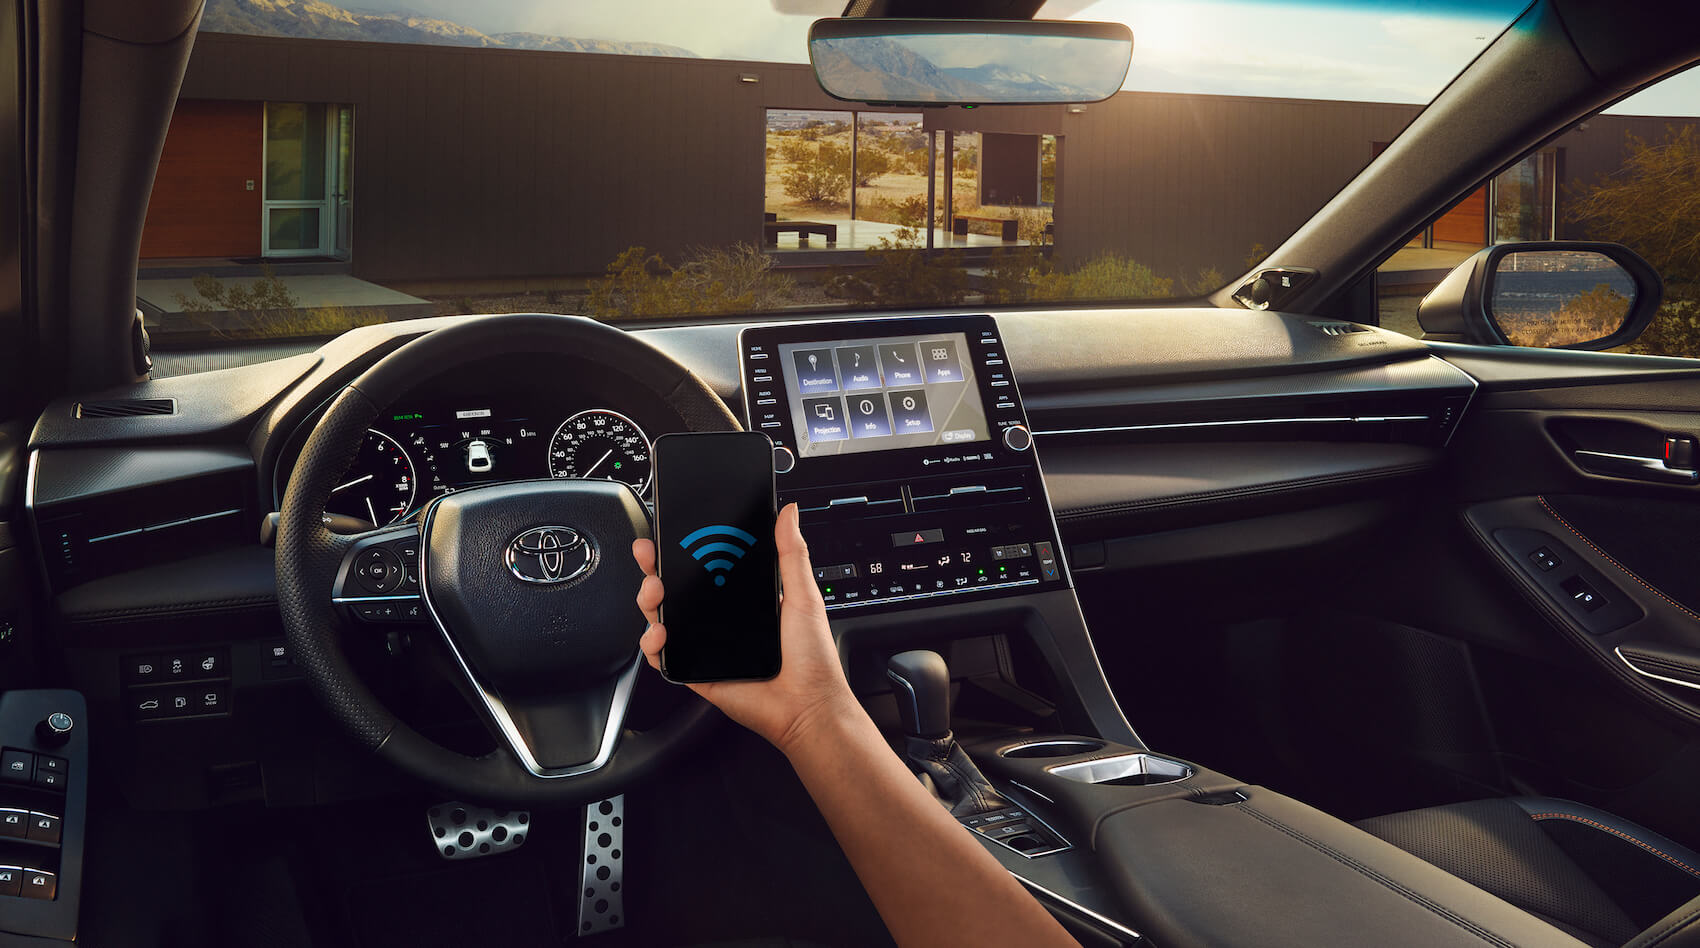 2022 Toyota Avalon technology features